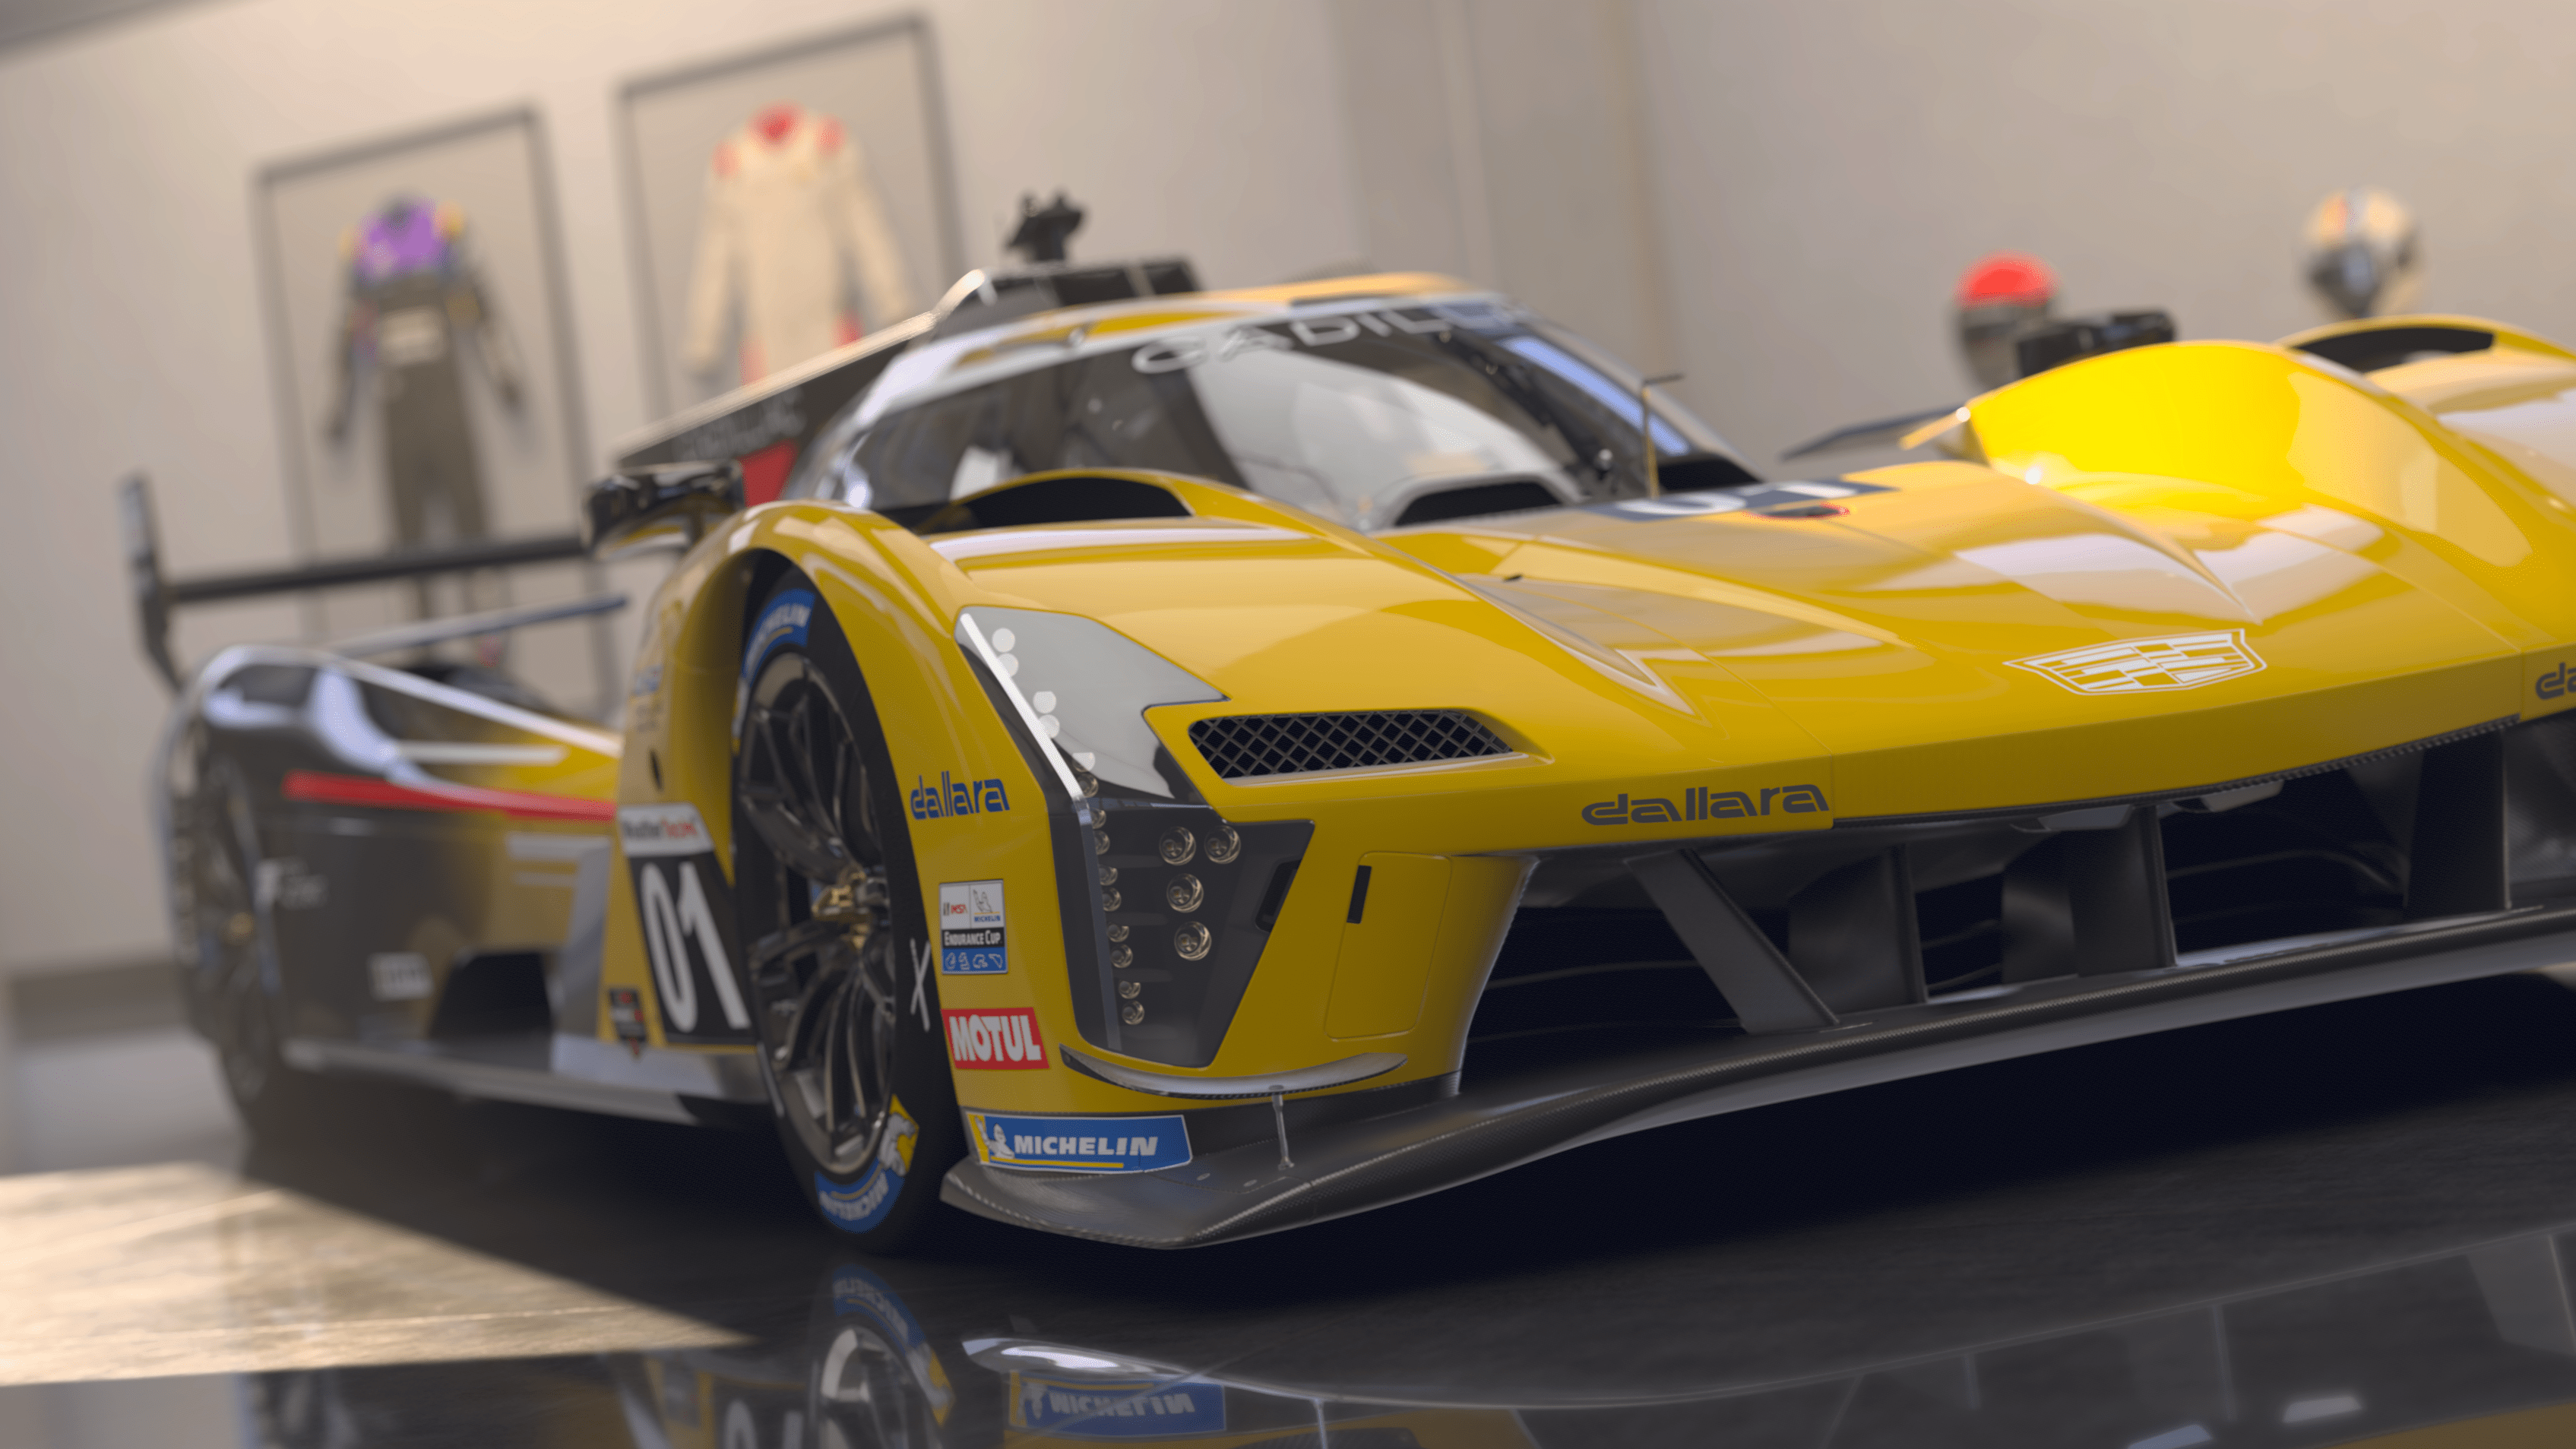 Forza Motorsport 7 Garage opens today